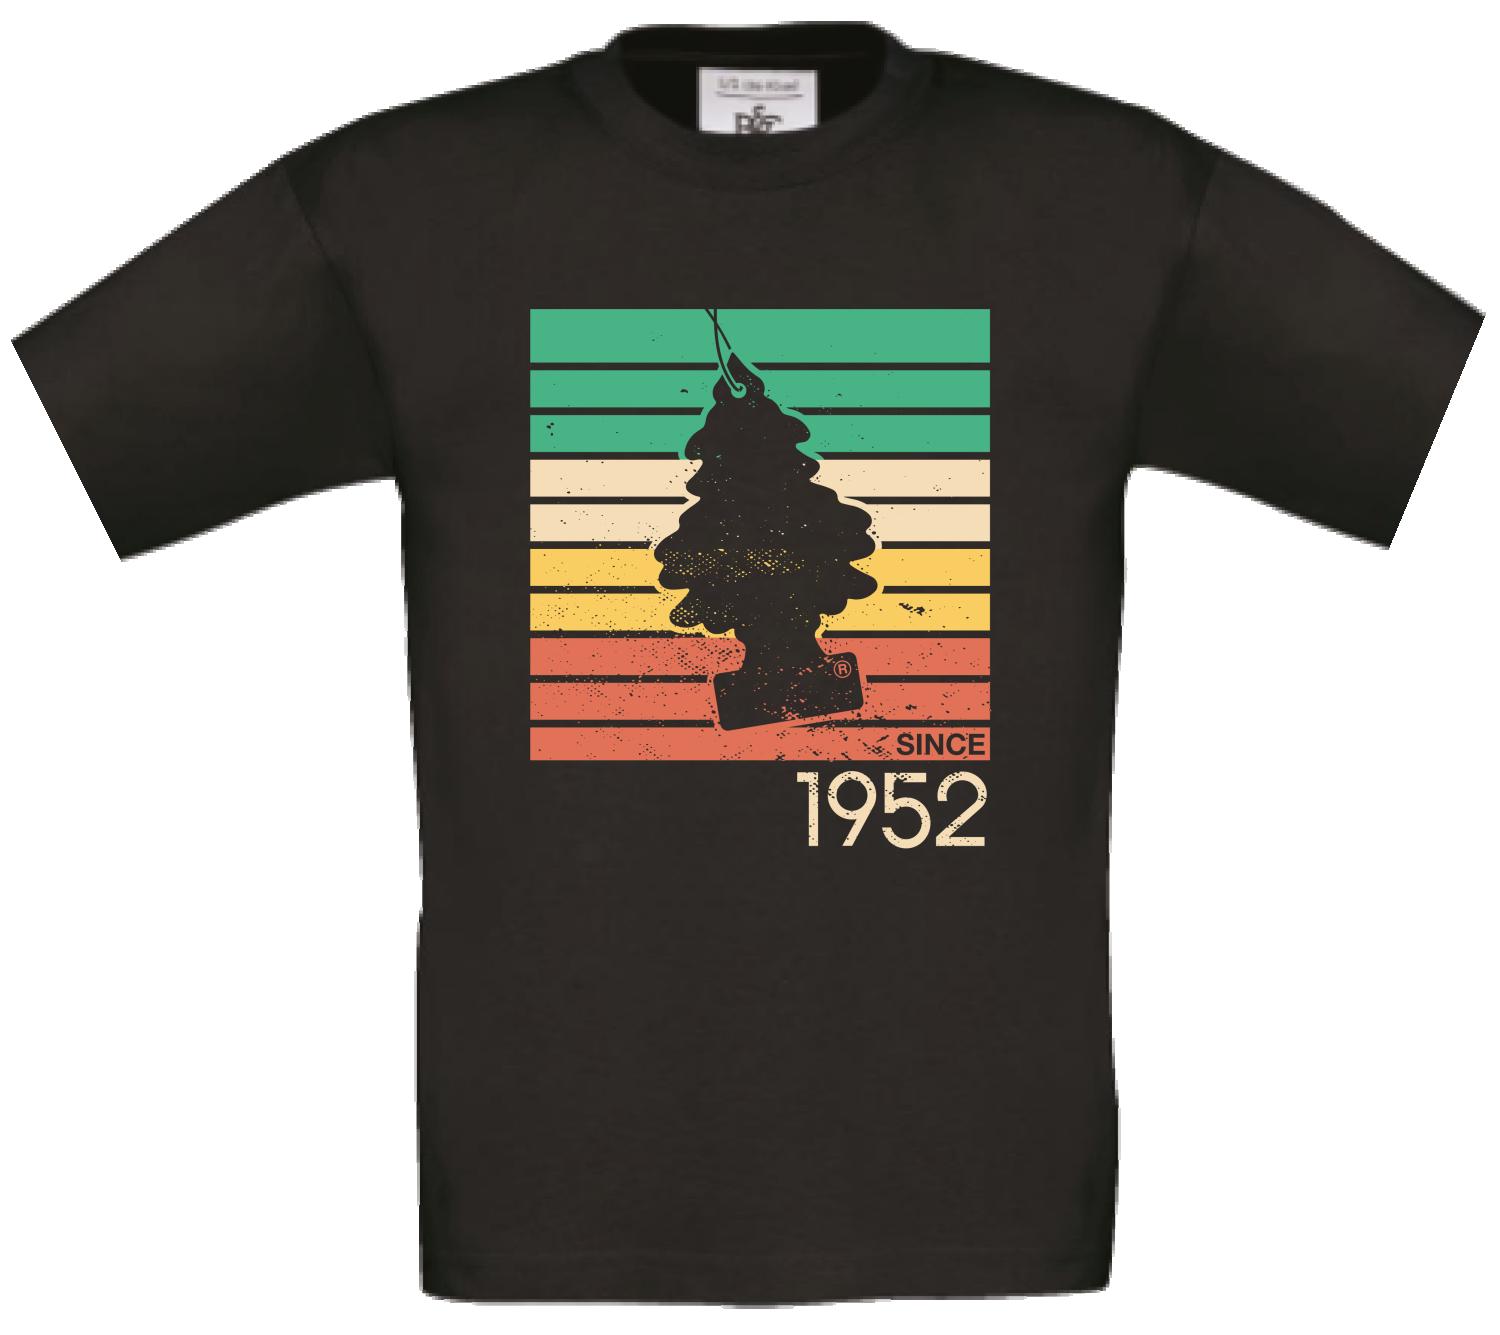 Wunderbaum T-shirt